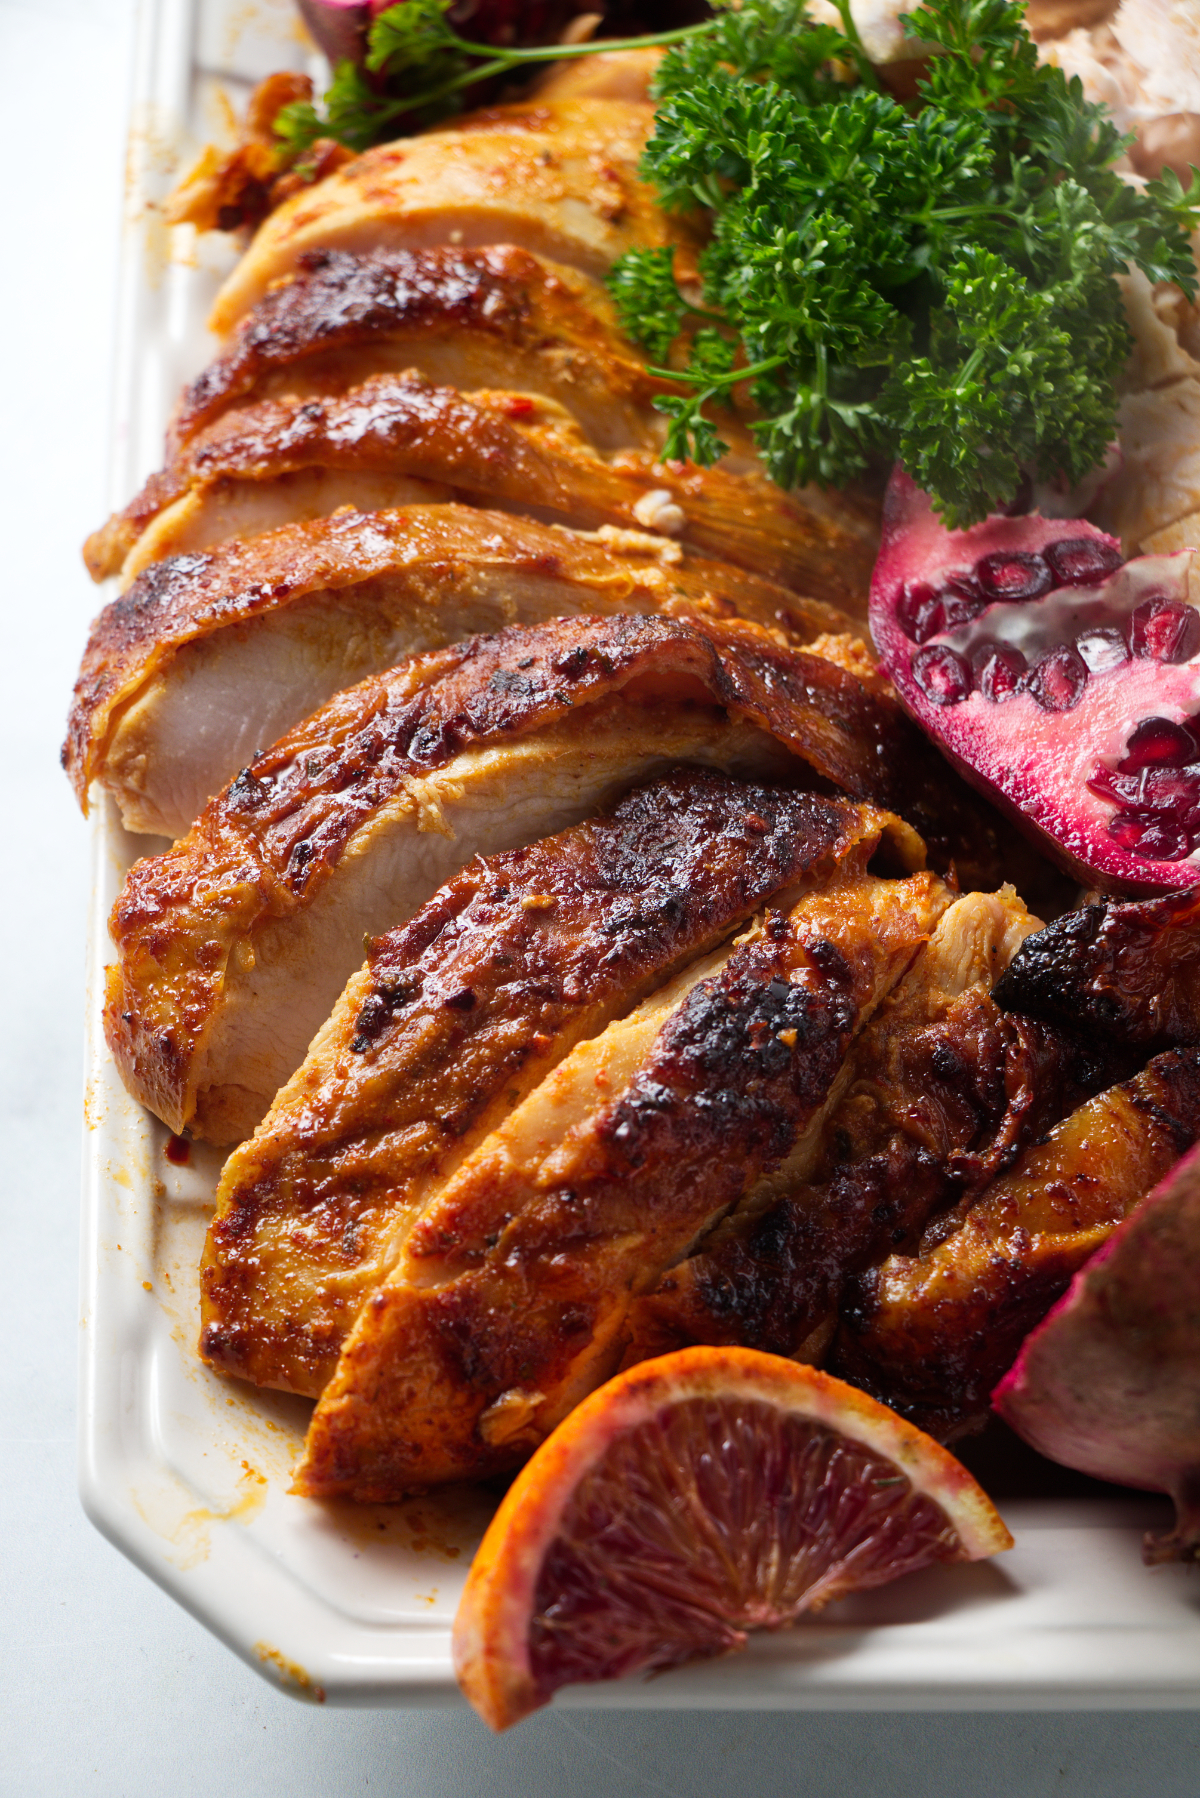 Sliced turkey served on a platter with garnish.